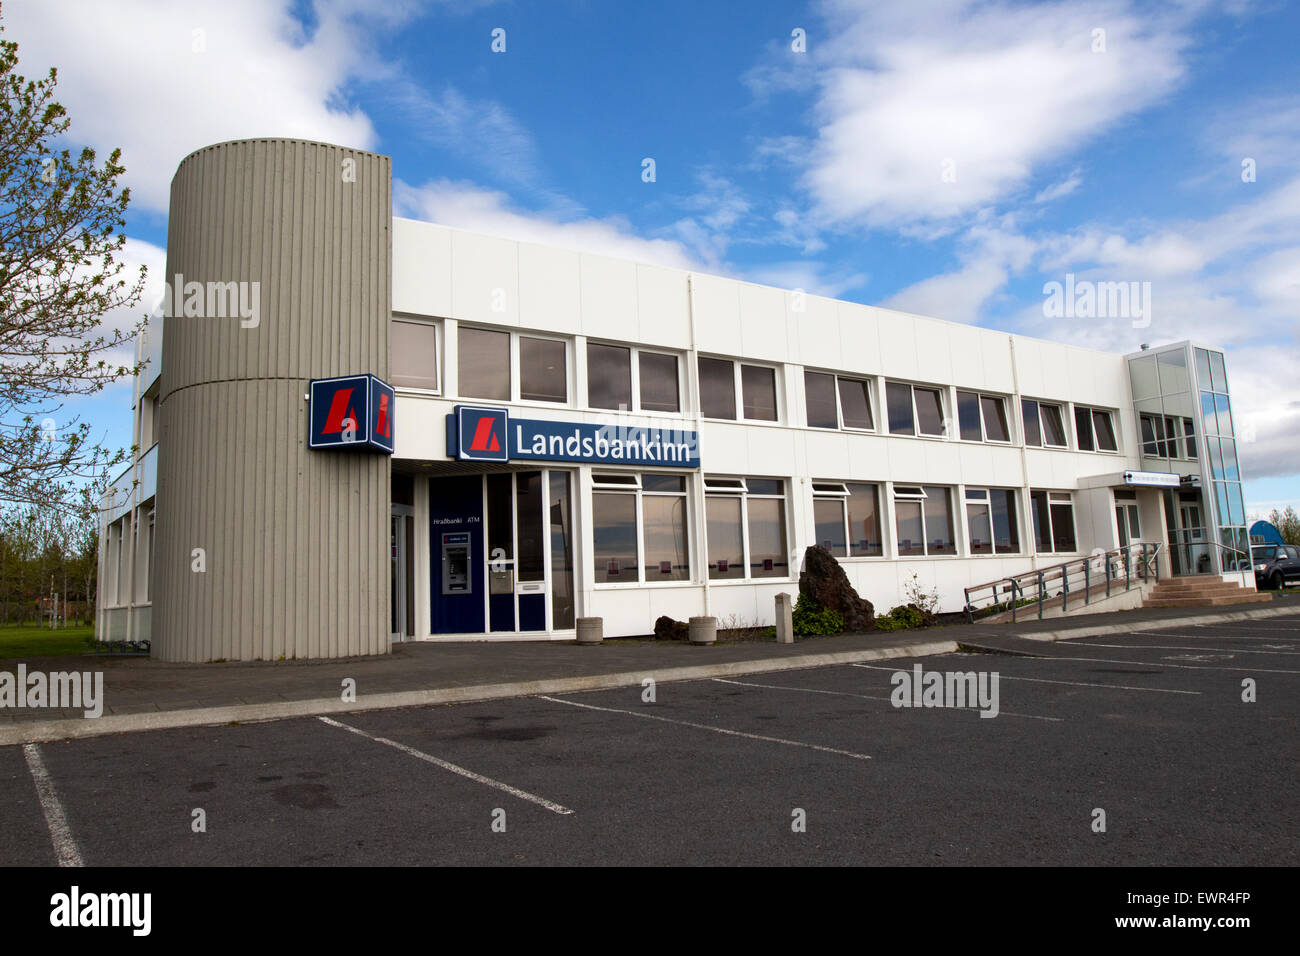 landsbankinn bank branch in Hlidarendi Hvolsvollur Iceland Stock Photo